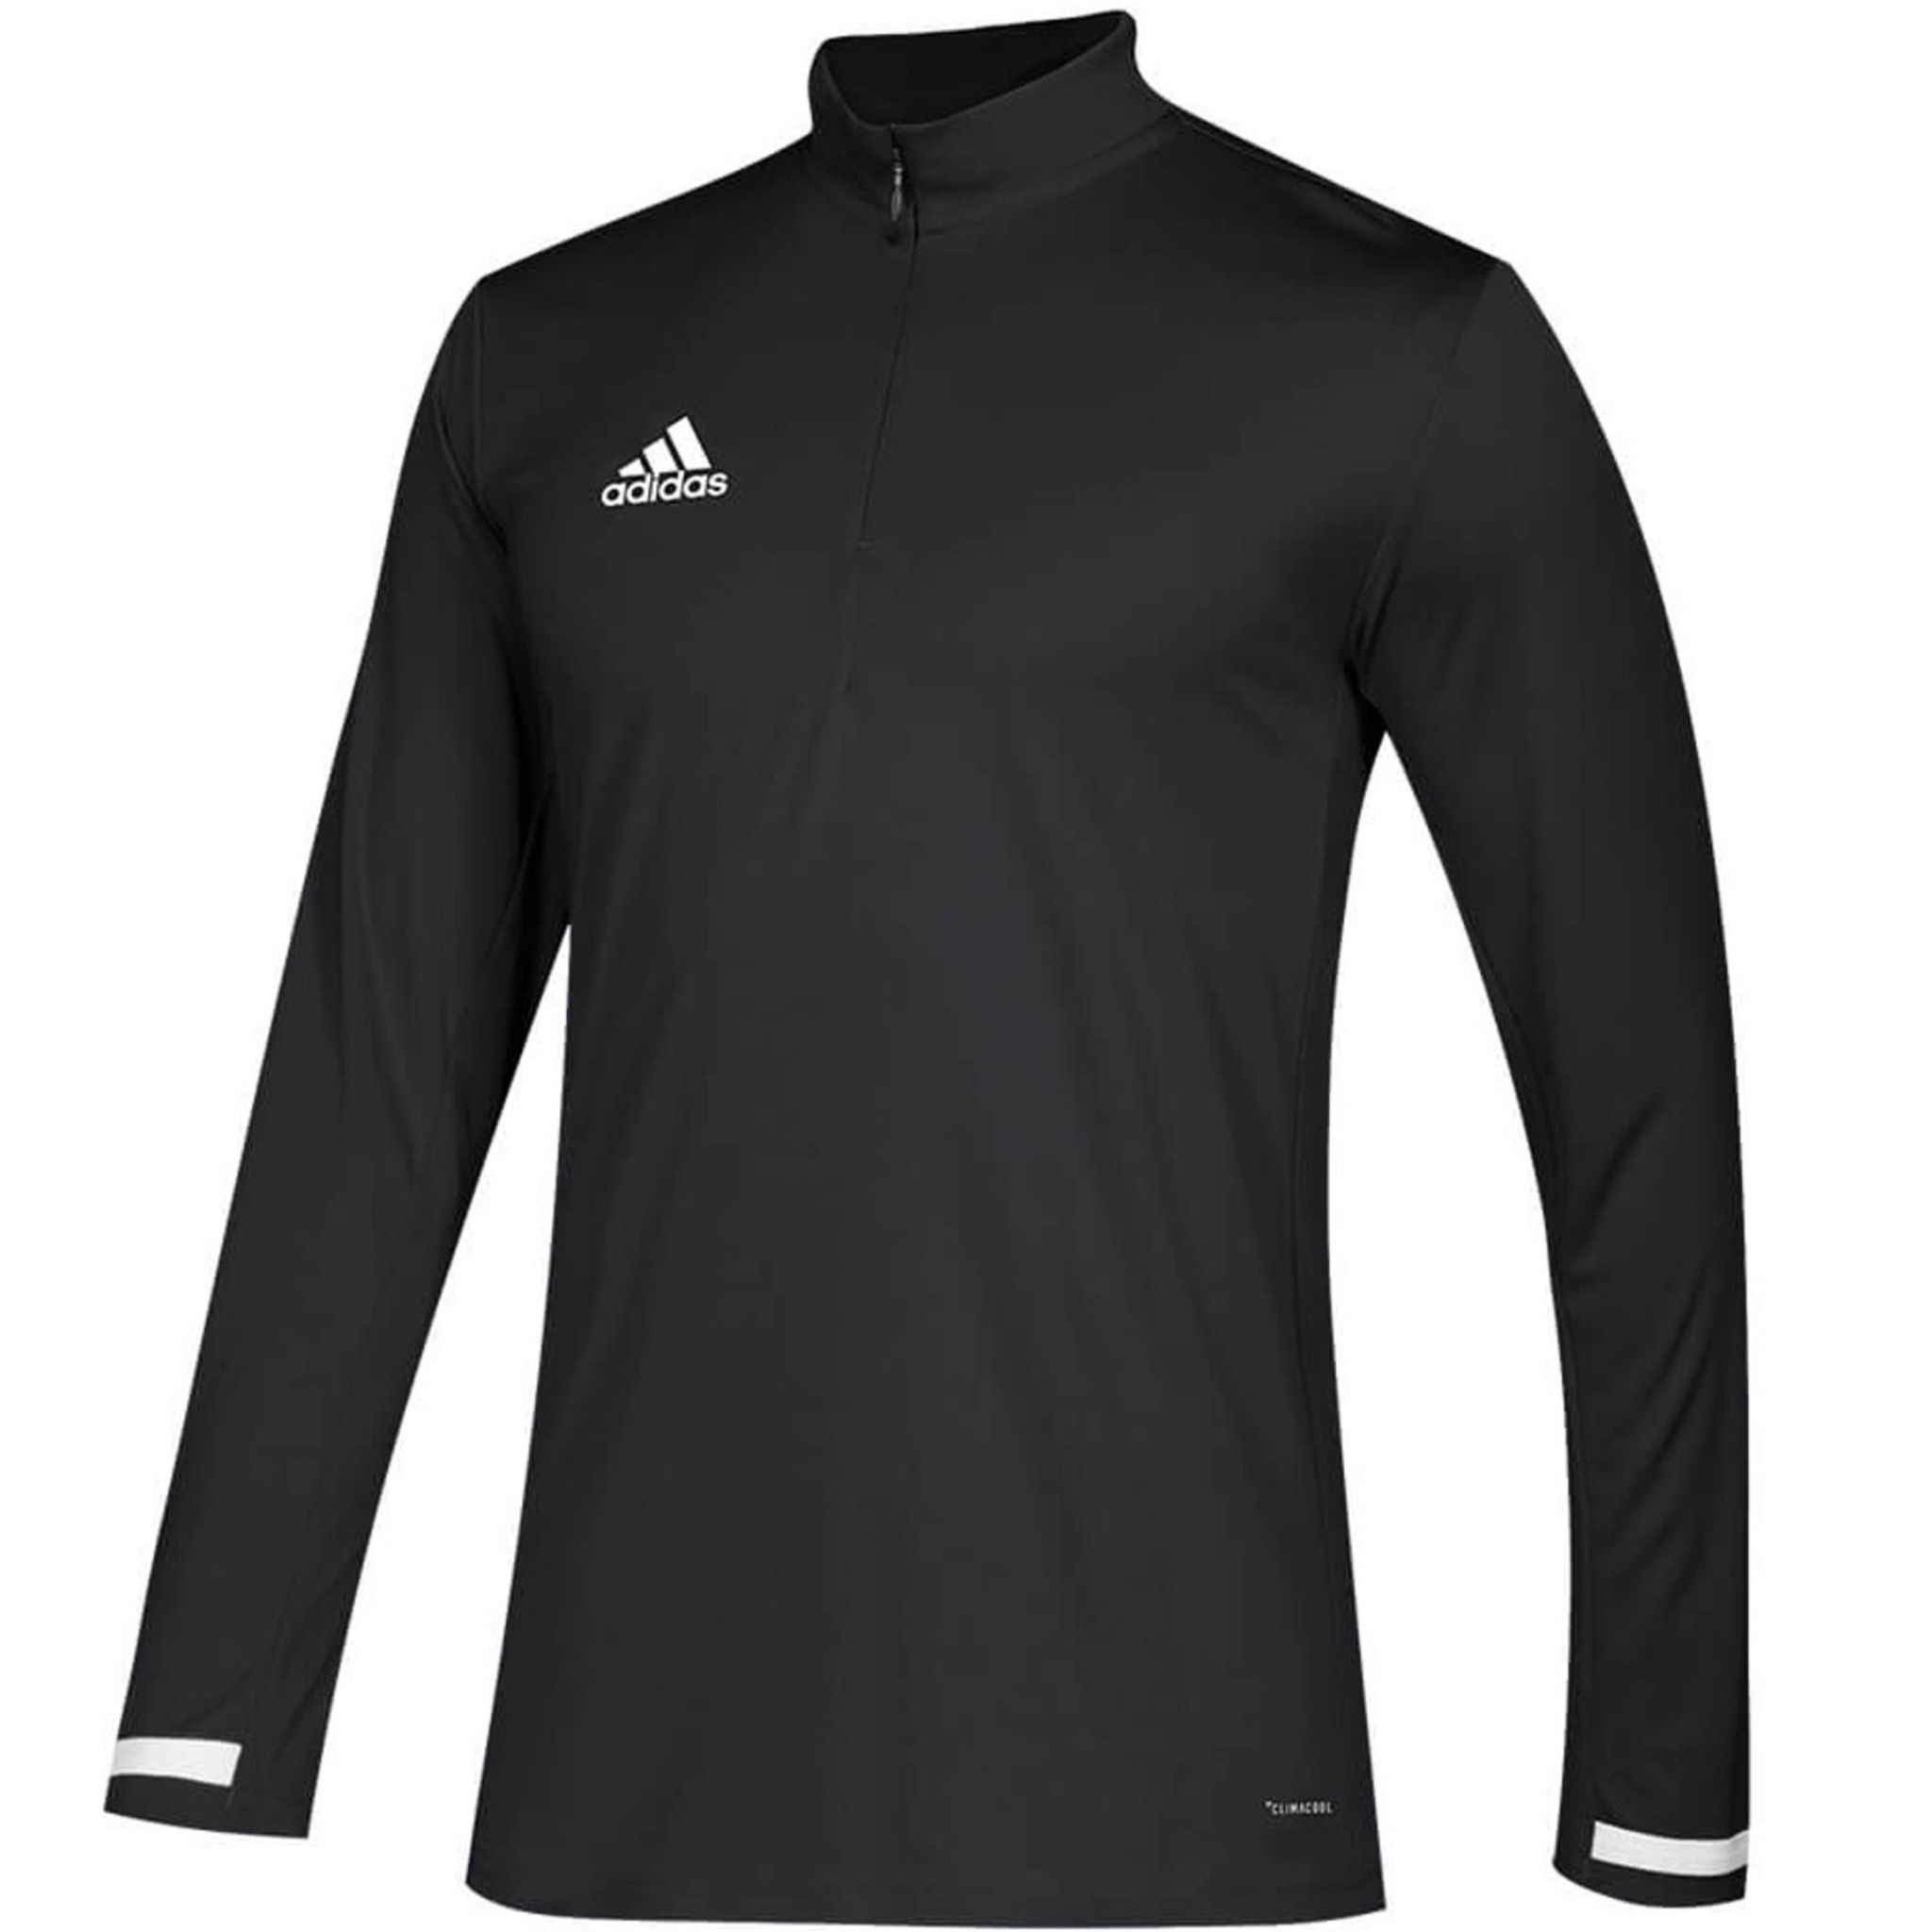 Adidas T19 1/4 Men's Long Sleeve Top > Black